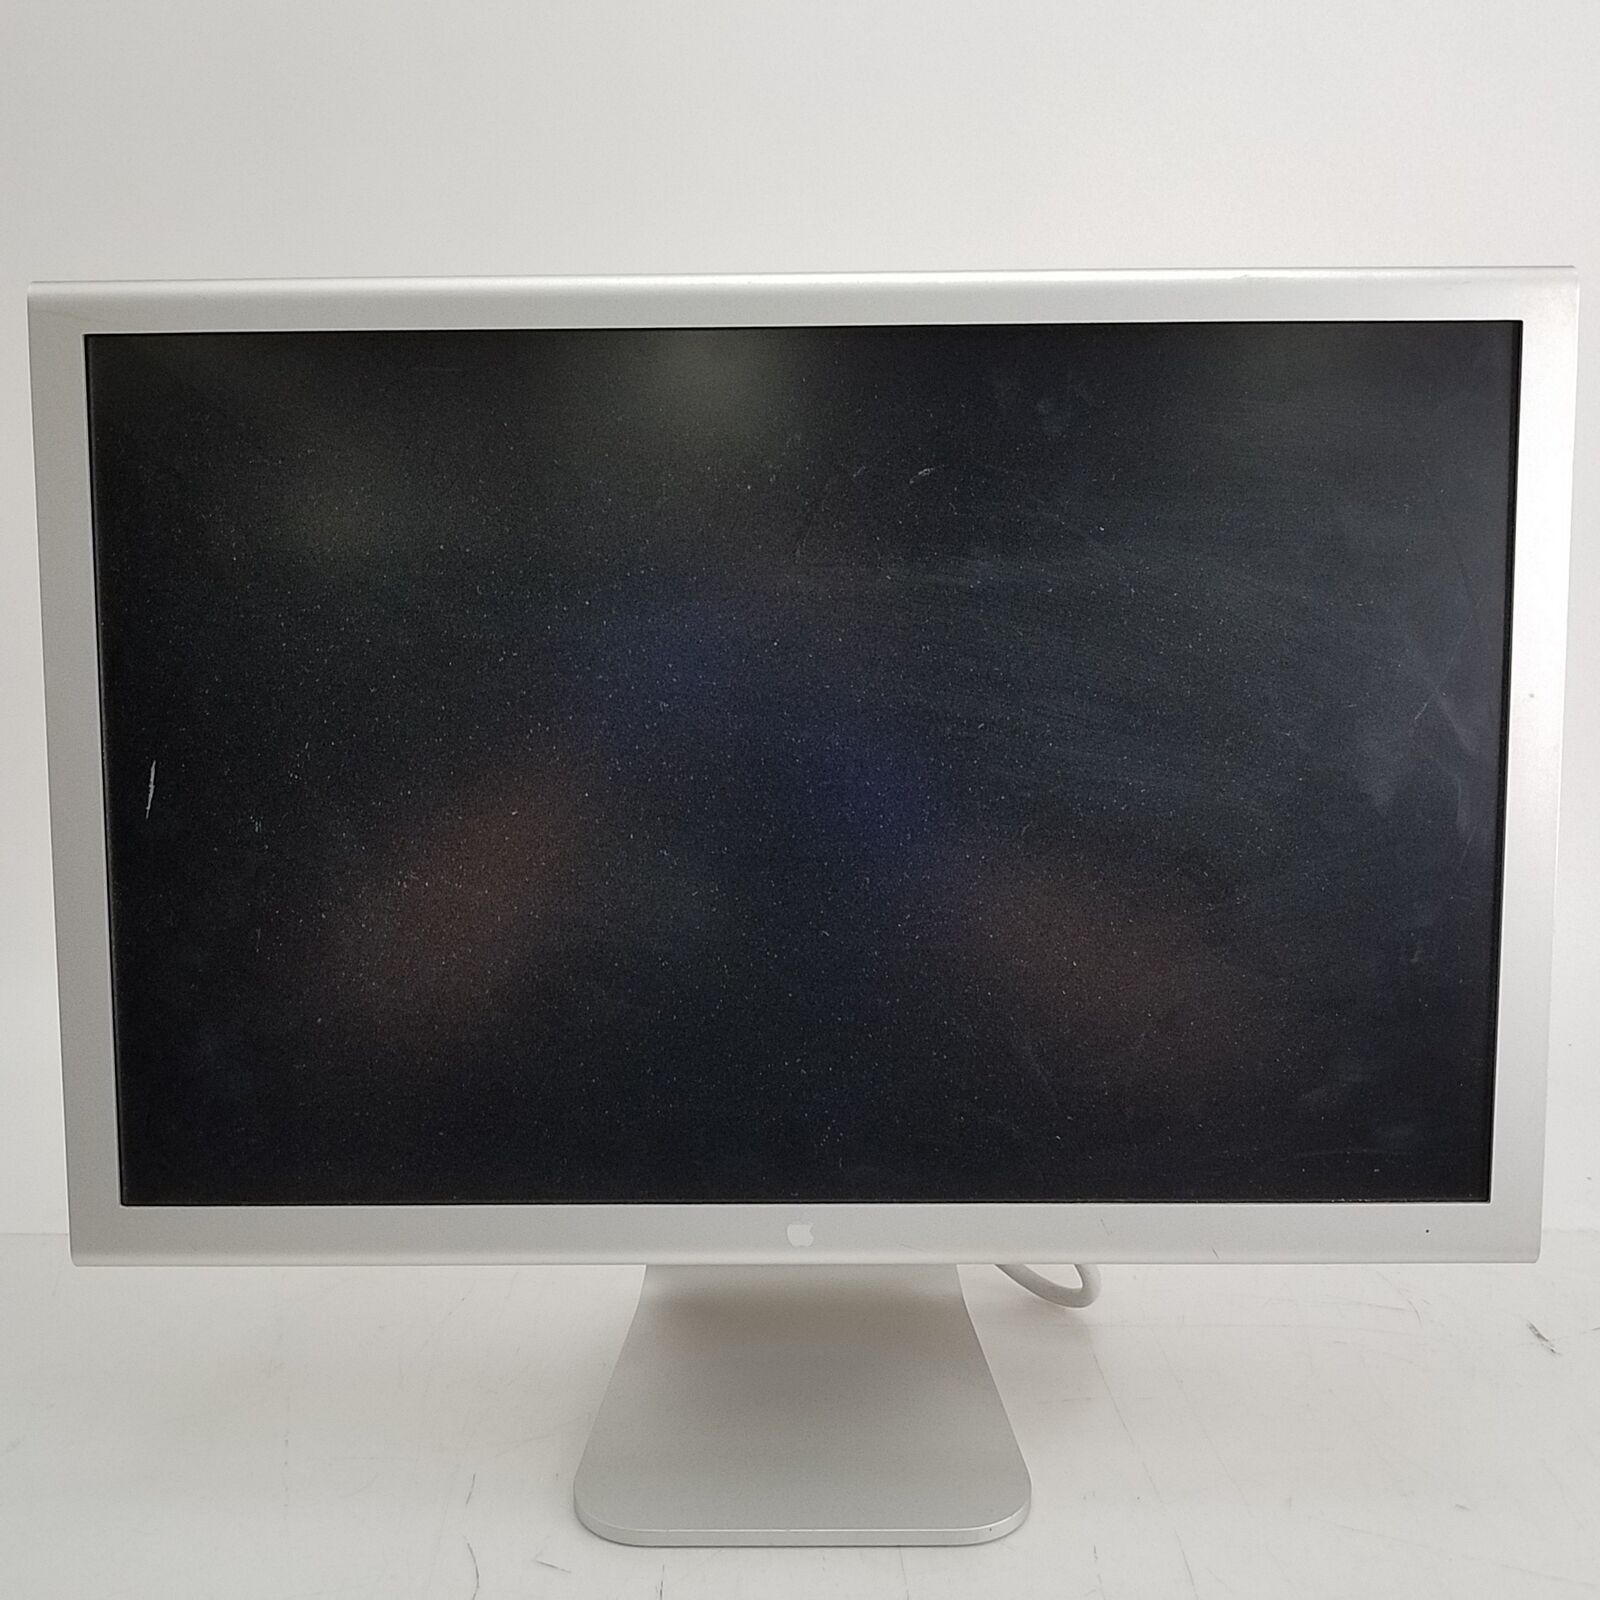 Apple A1082 White Aluminum Cinema High Definition Tilt Widescreen LCD Display